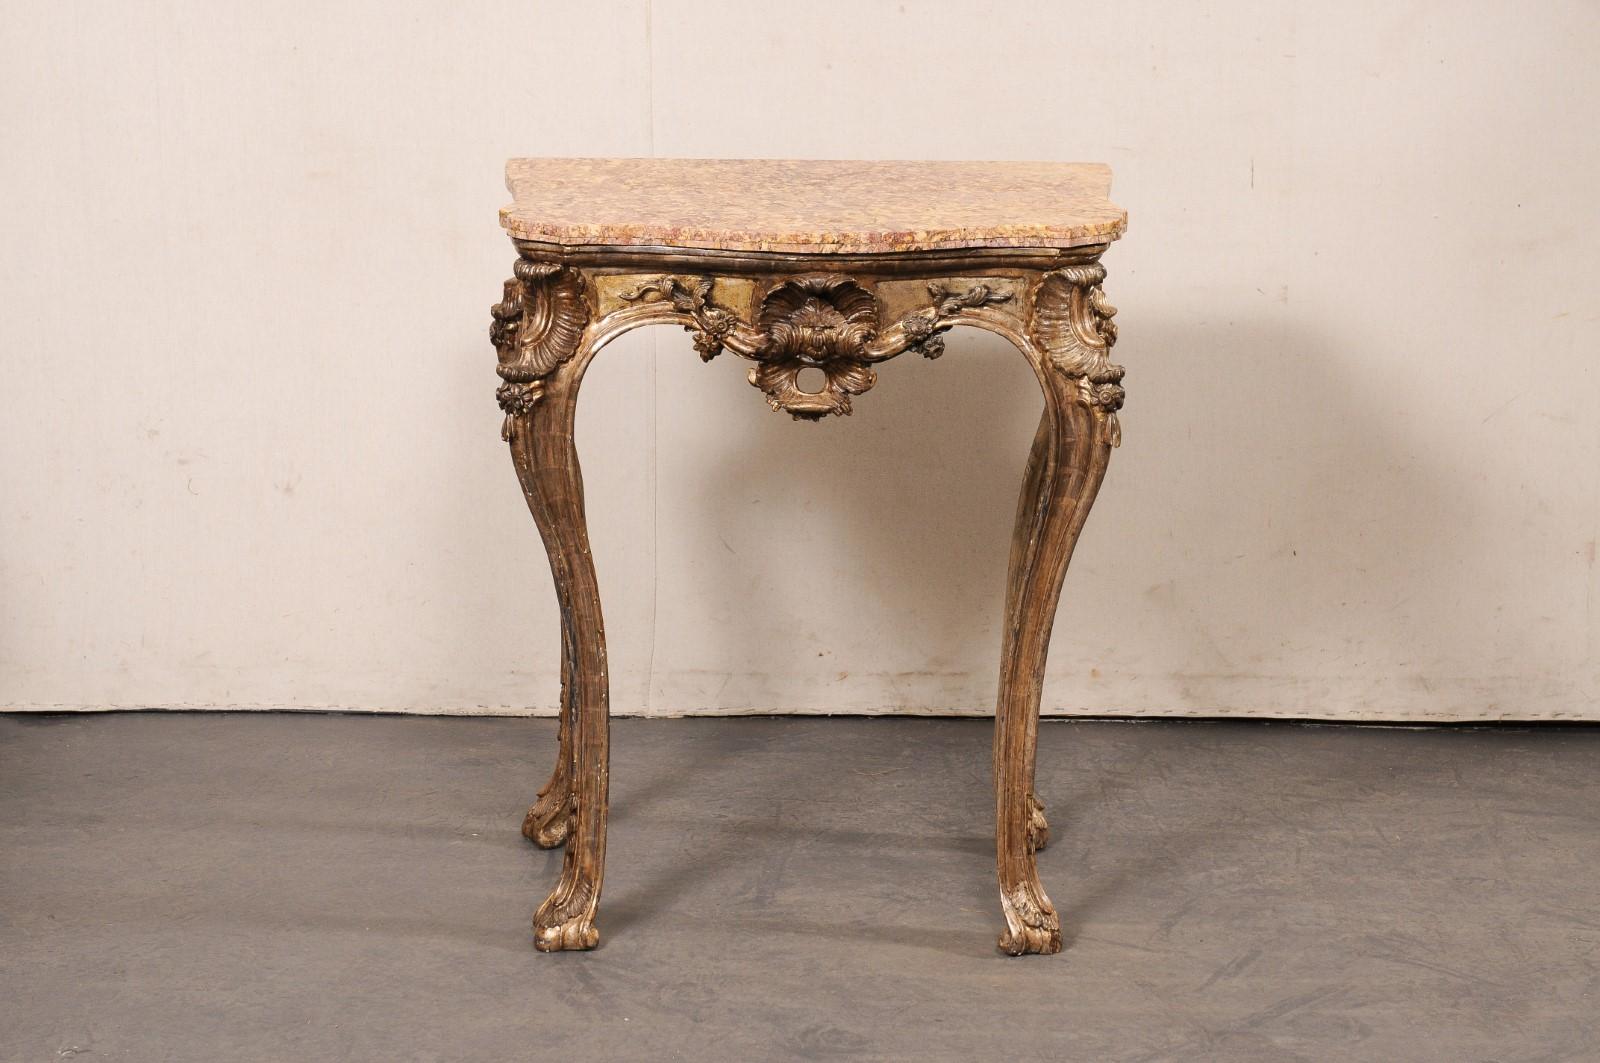 Italian Period Rococo Ornate Accent Table w/its Original Finish & Marble Top For Sale 7